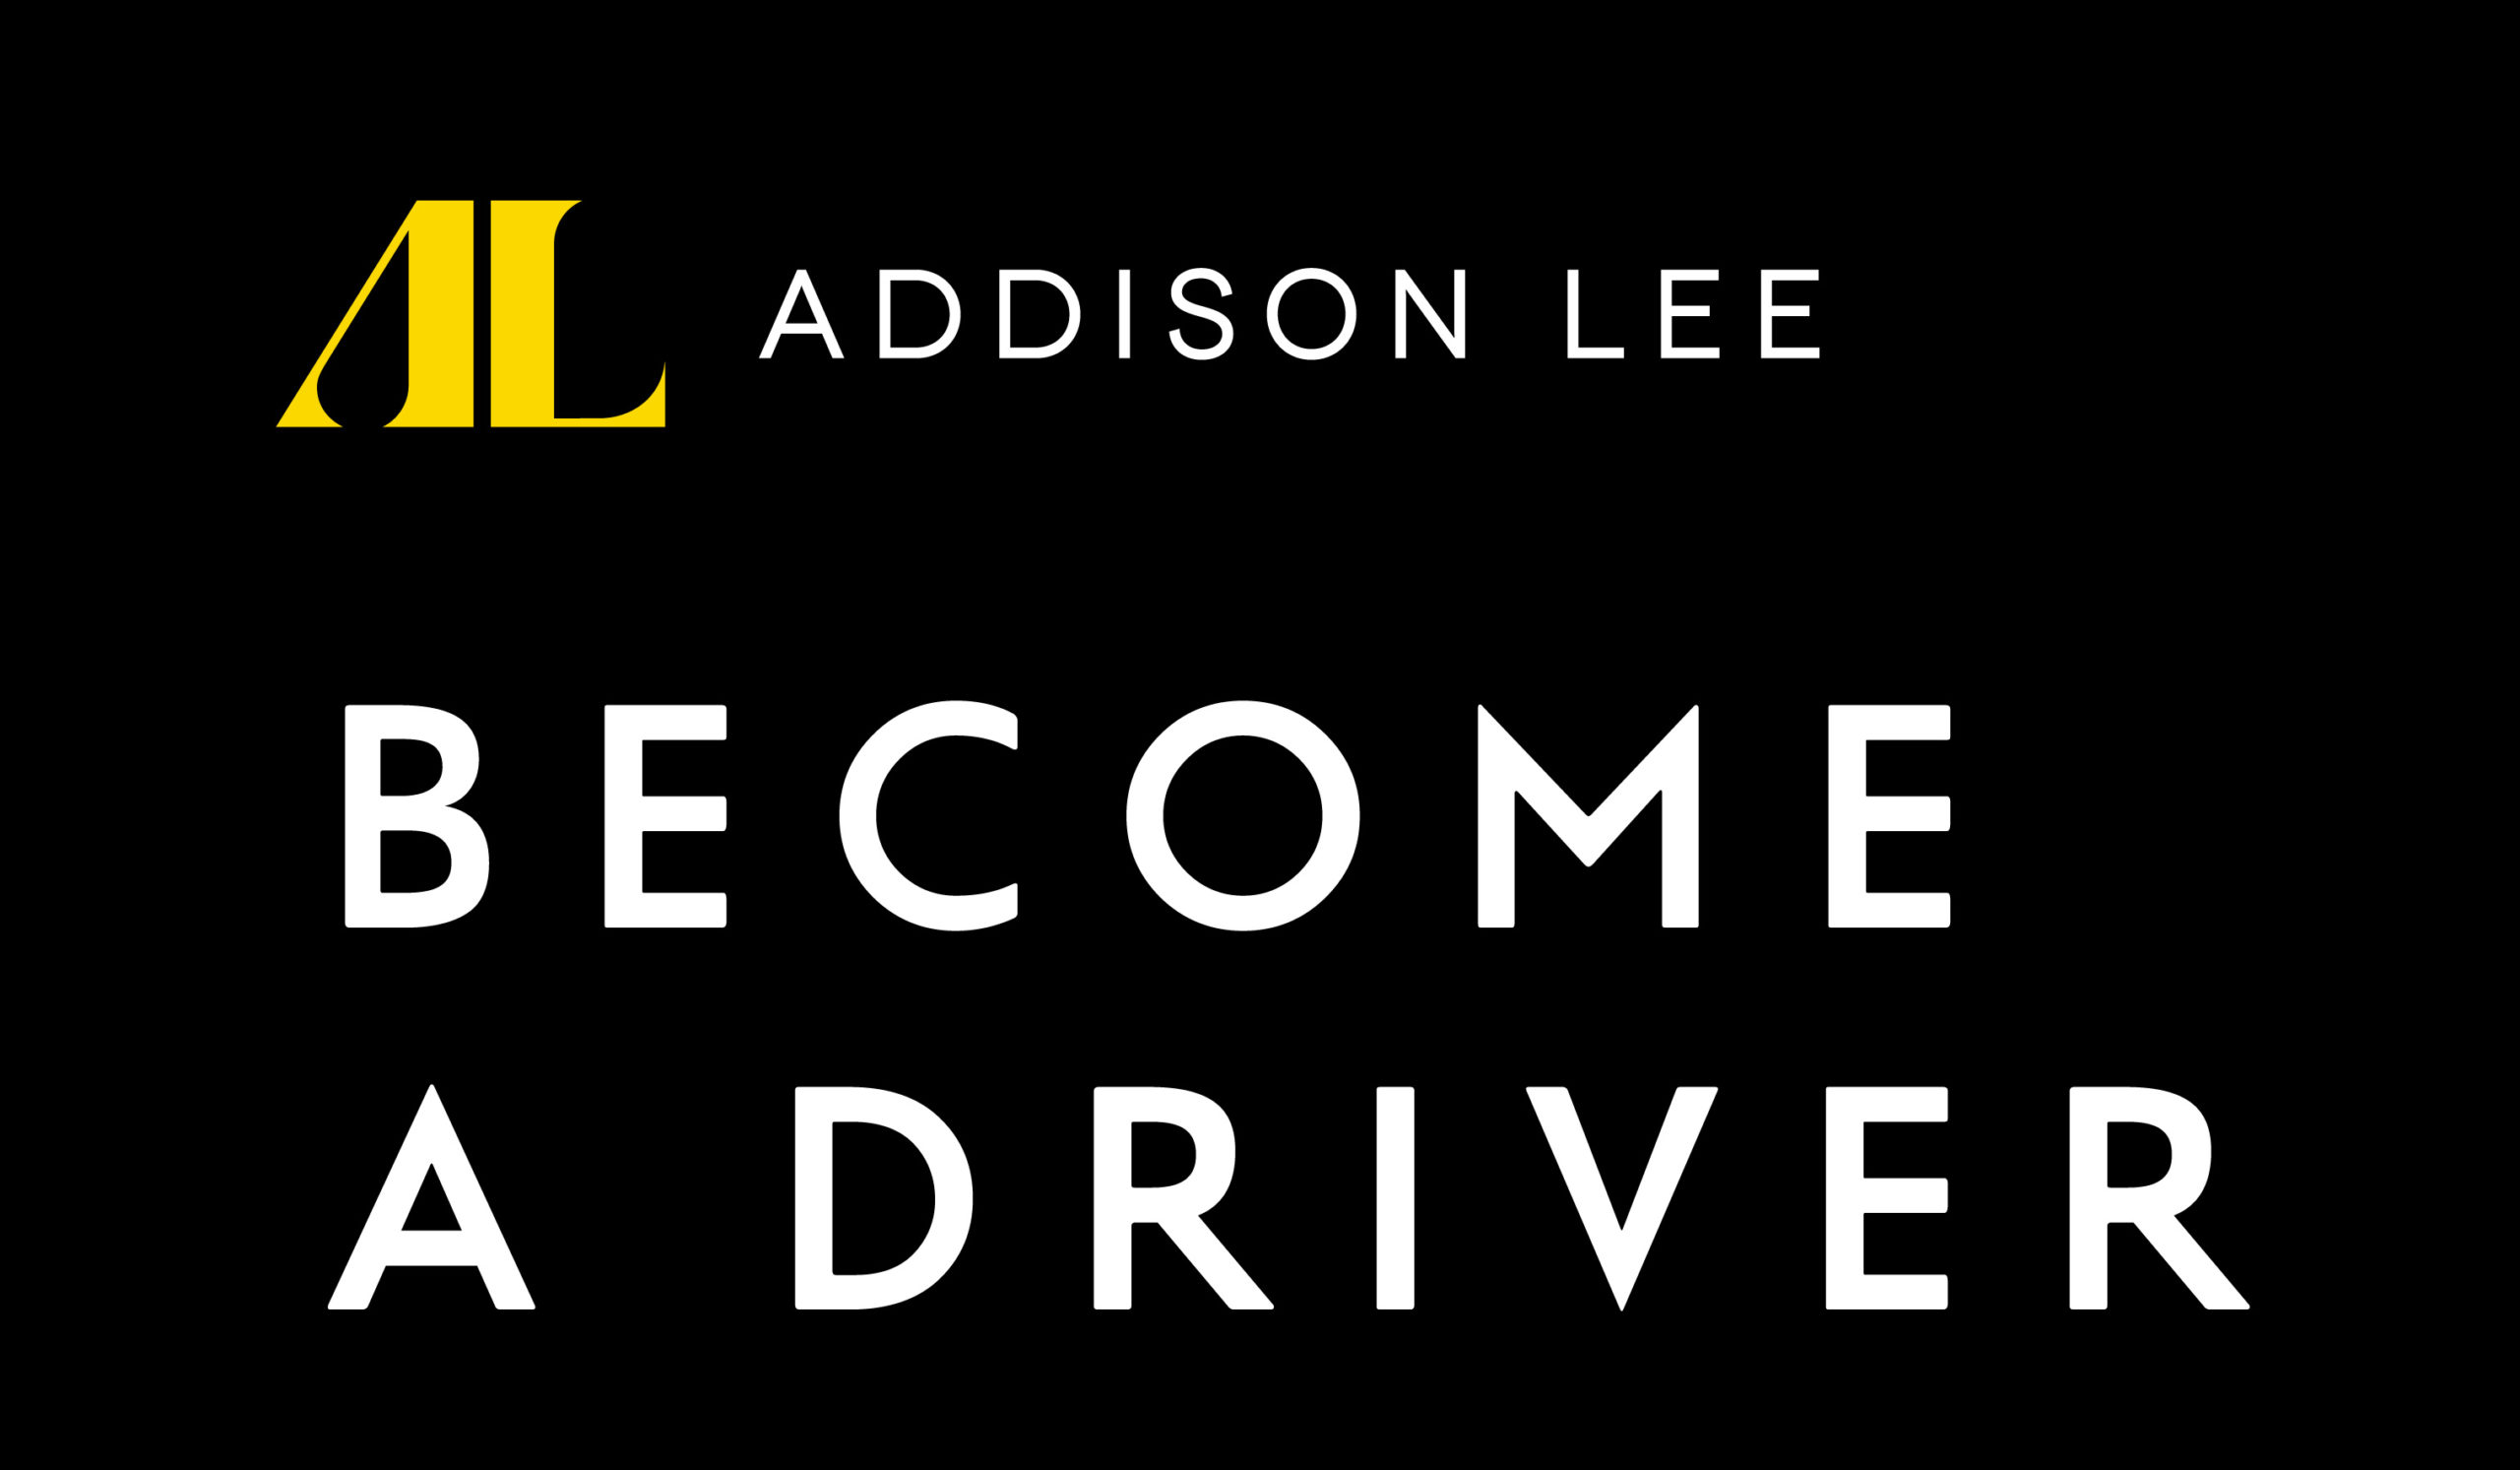 Join Addison Lee Addison Lee